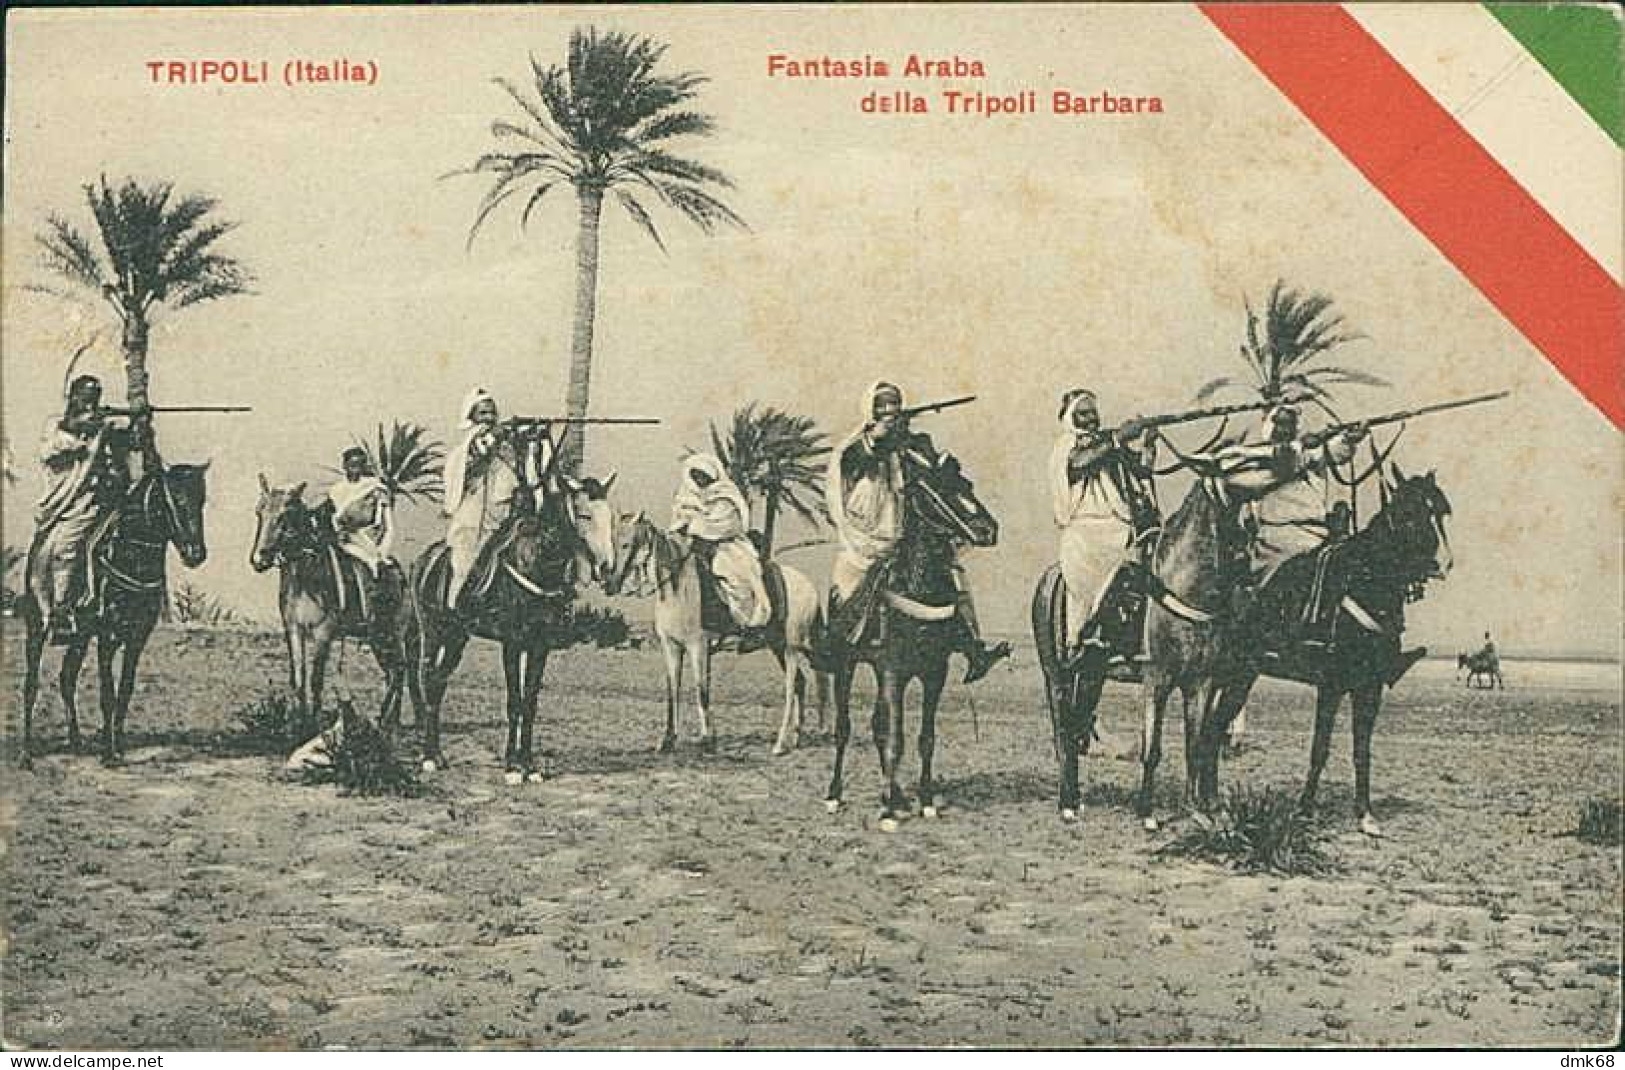 LIBIA / LIBYA - TRIPOLI BARBARA - FANTASIA ARABA - GUERRIERI / WARRIORS - PHOTO MICELI - 1910s (12462) - Libyen